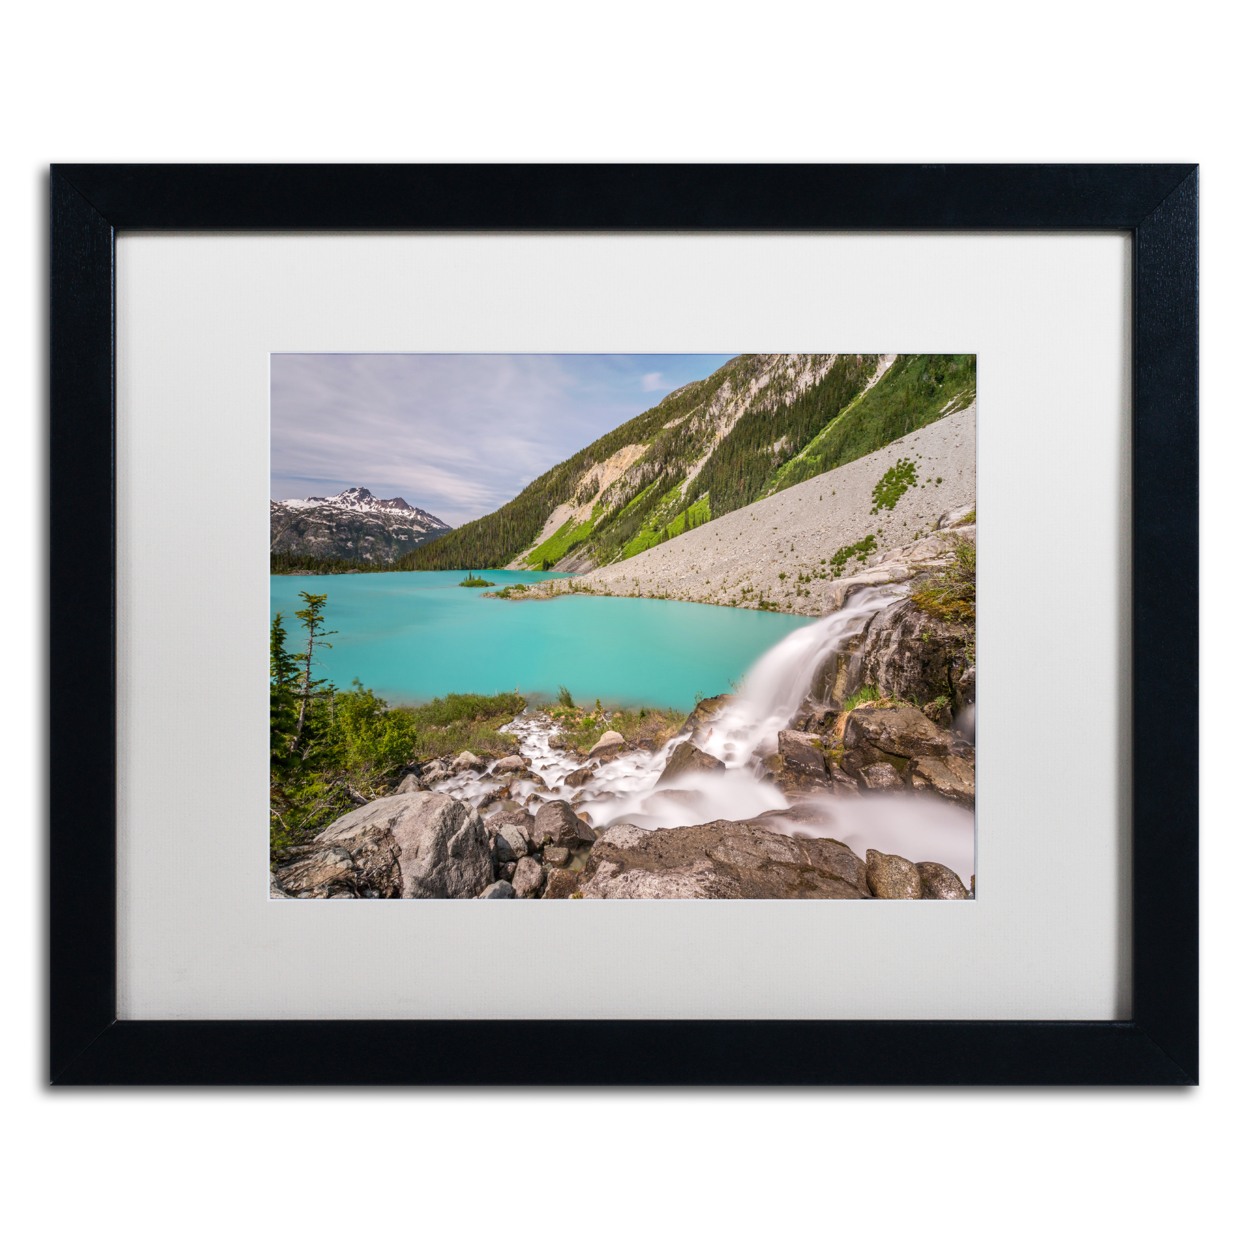 Pierre Leclerc 'Glacier Waterfall' Black Wooden Framed Art 18 X 22 Inches